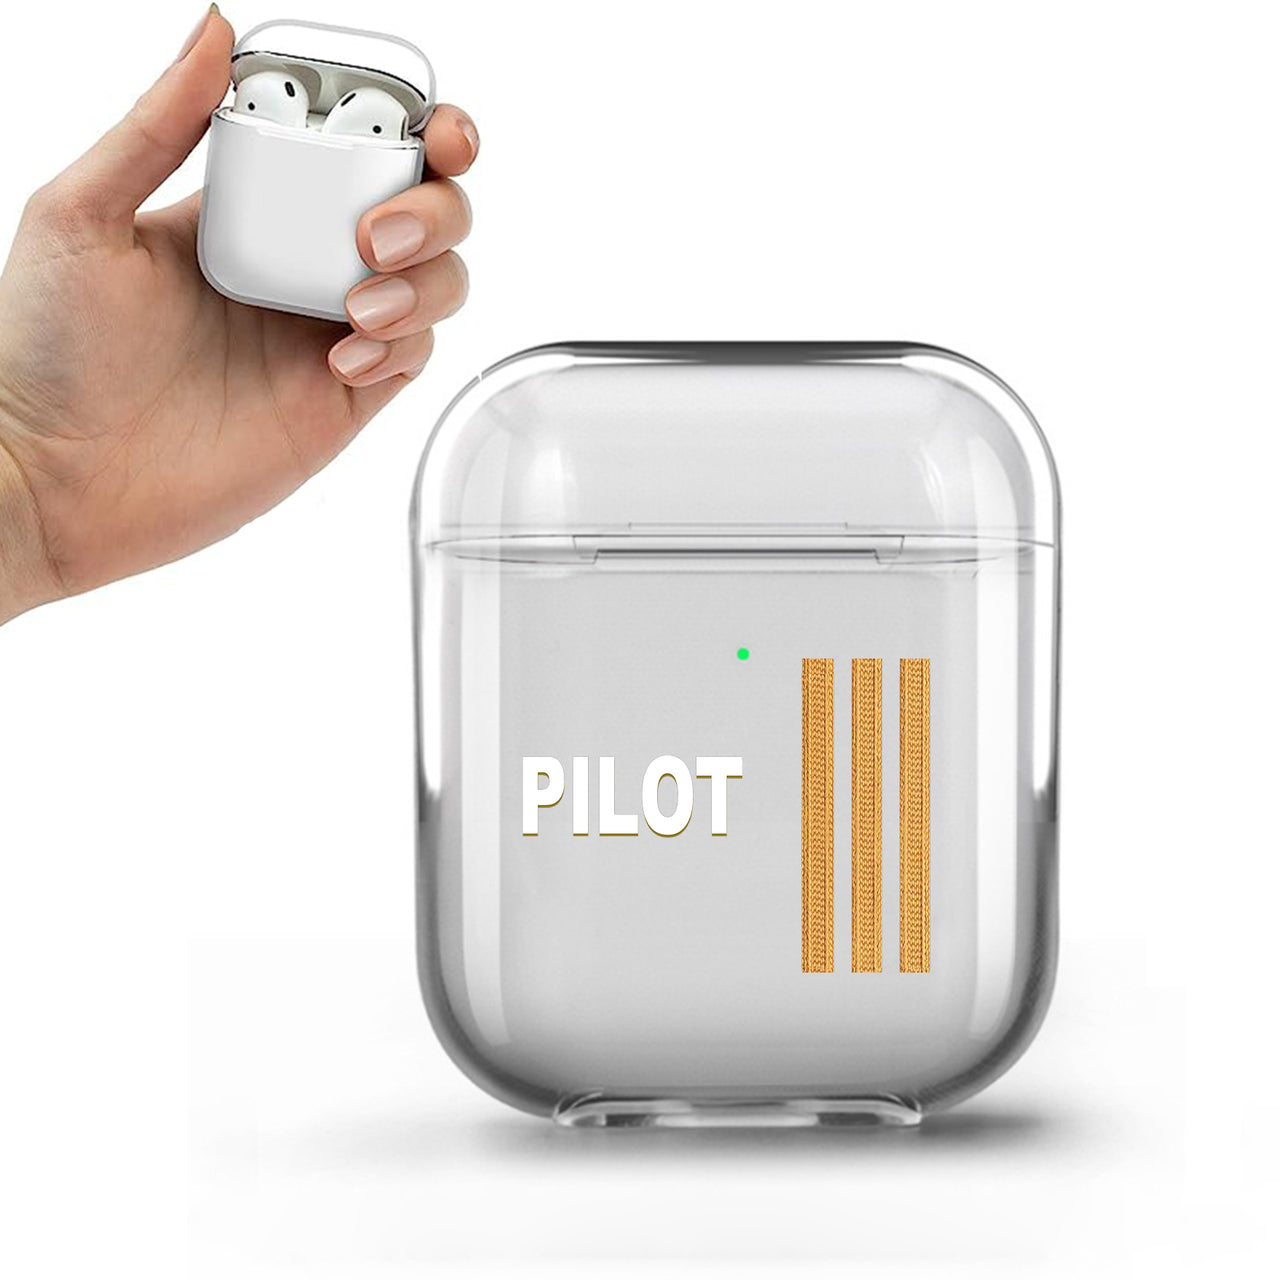 PILOT & Pilot Epaulettes (4,3,2 Lines) Designed Transparent Earphone AirPods Cases